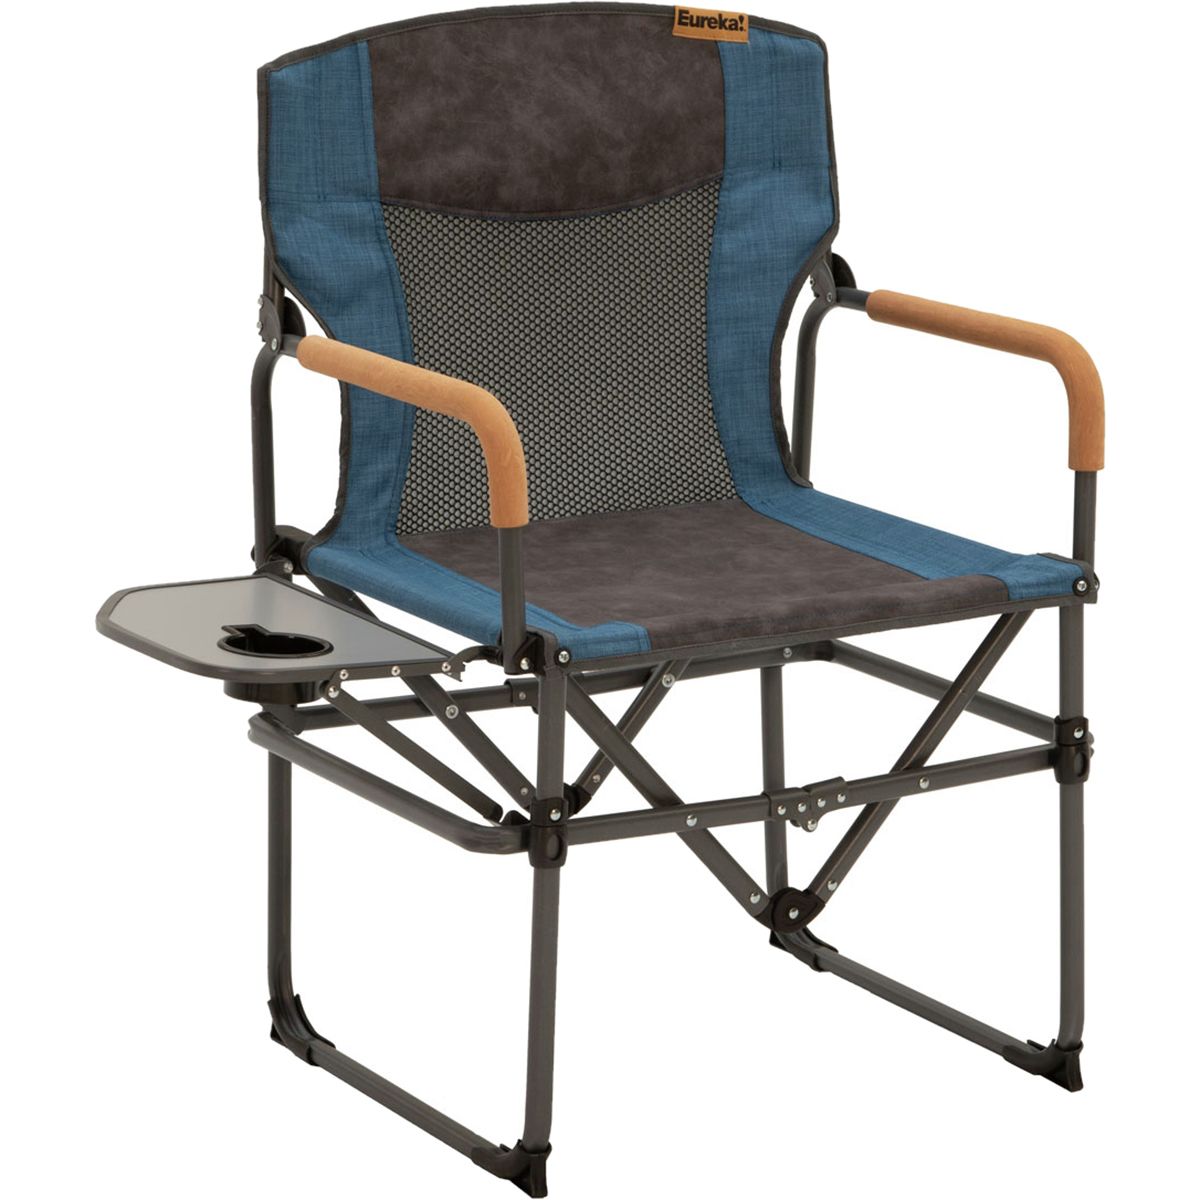 YETI Trailhead Camp Chair - Charcoal - Backcountry & Beyond